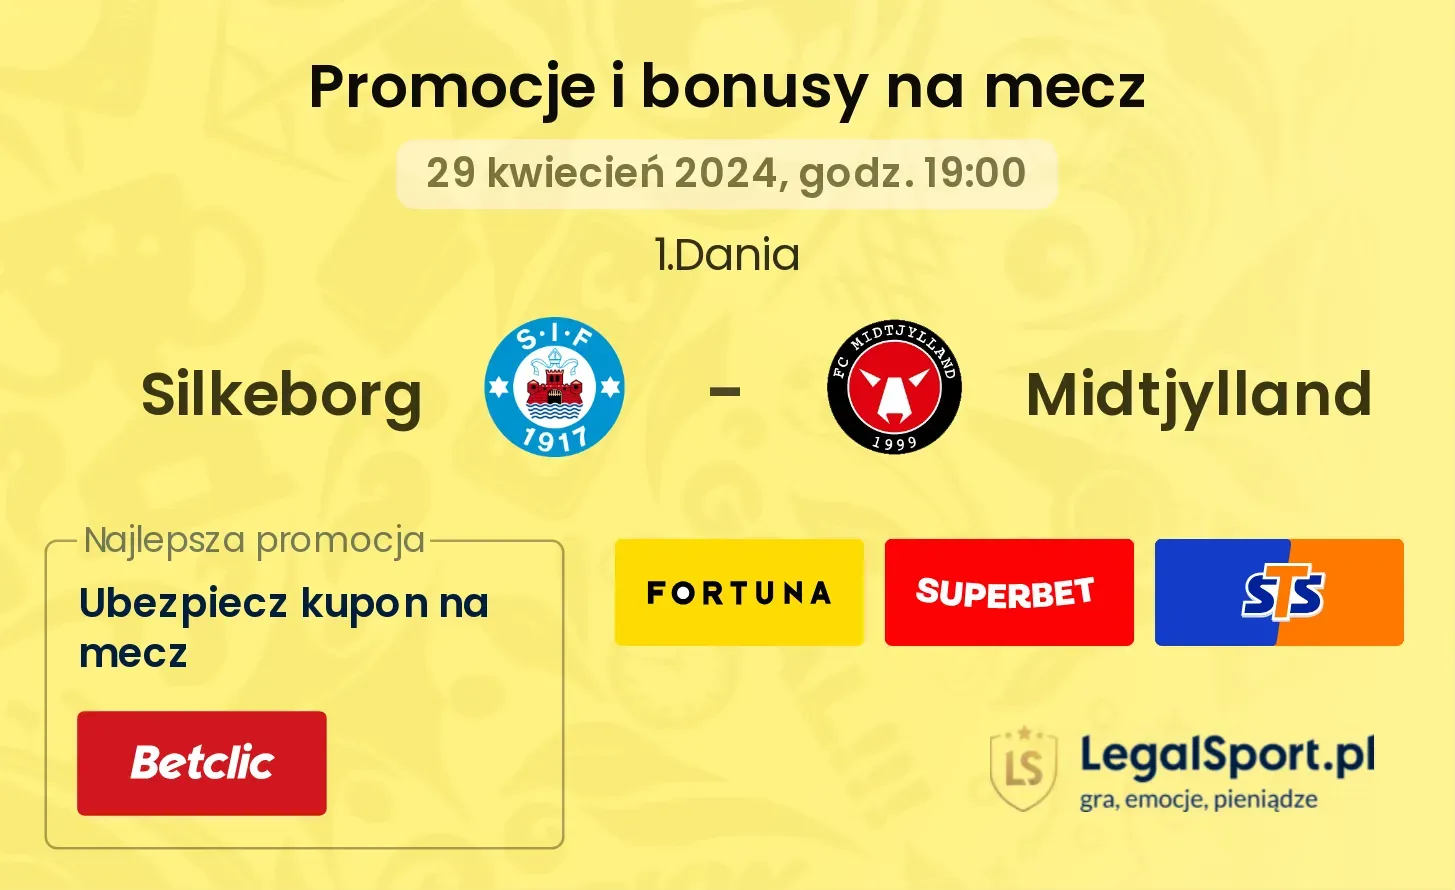 Silkeborg - Midtjylland promocje bonusy na mecz